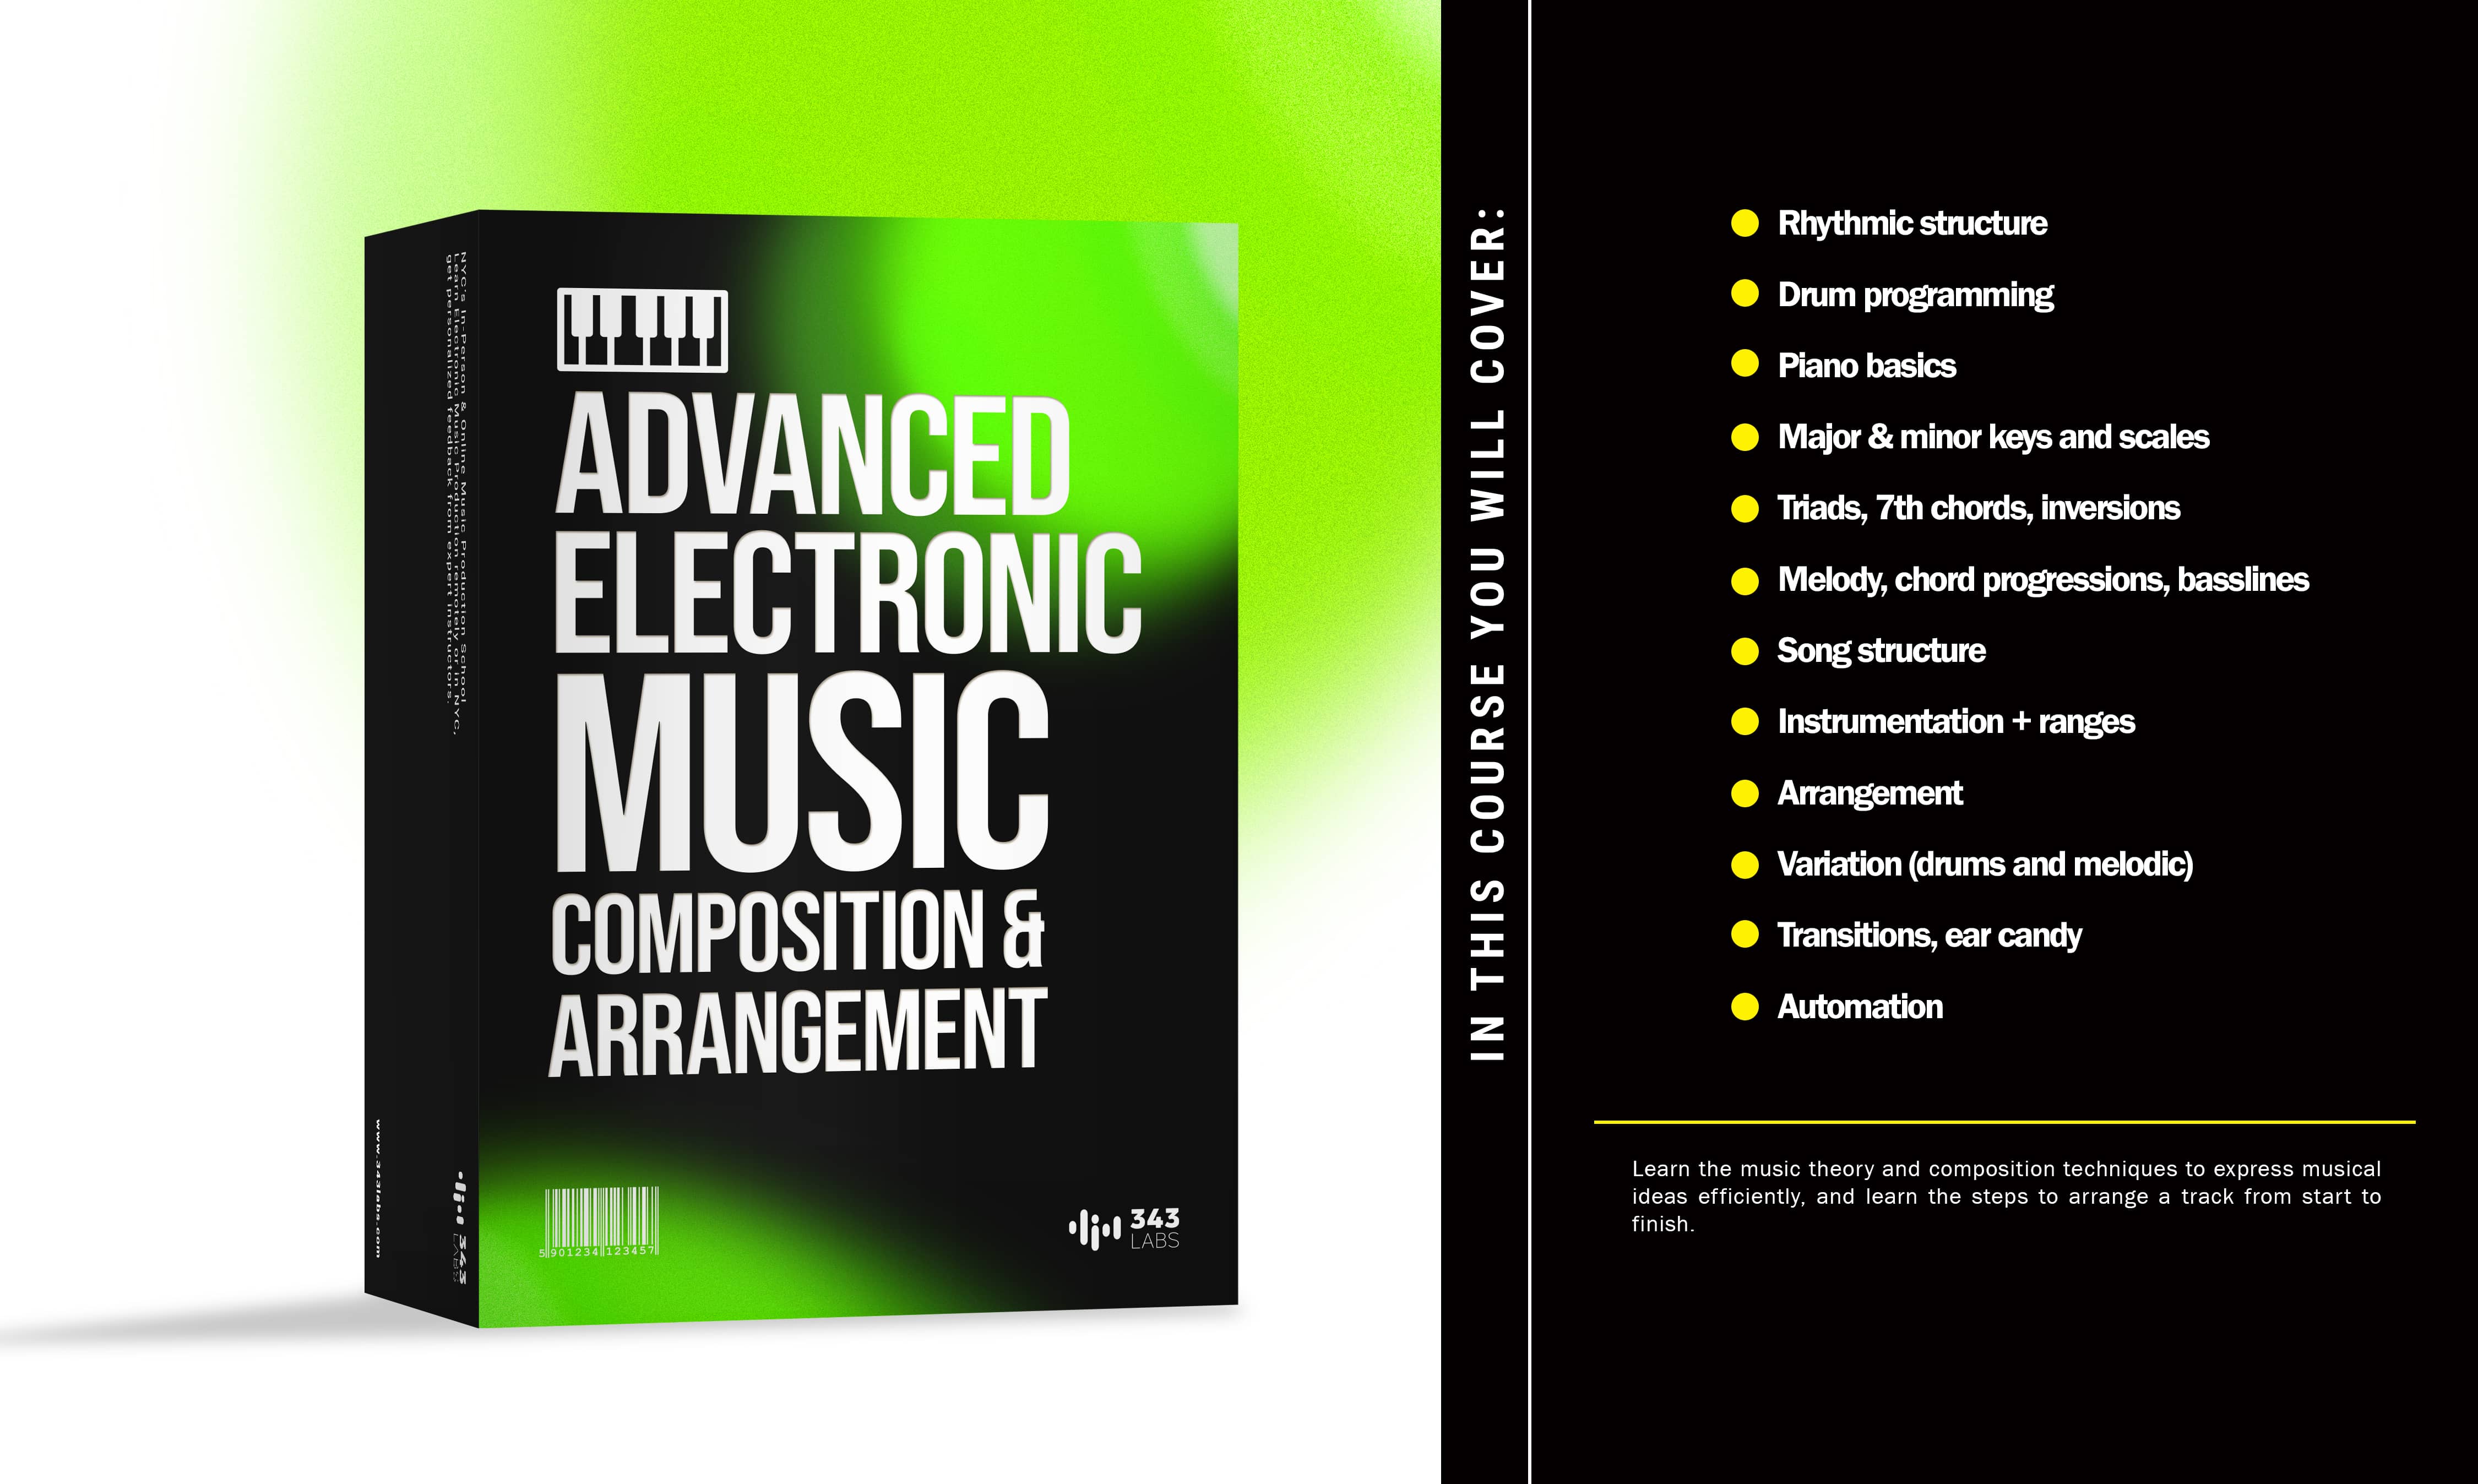 Advanced Electronic Music Composition & Arrangement [NYC]